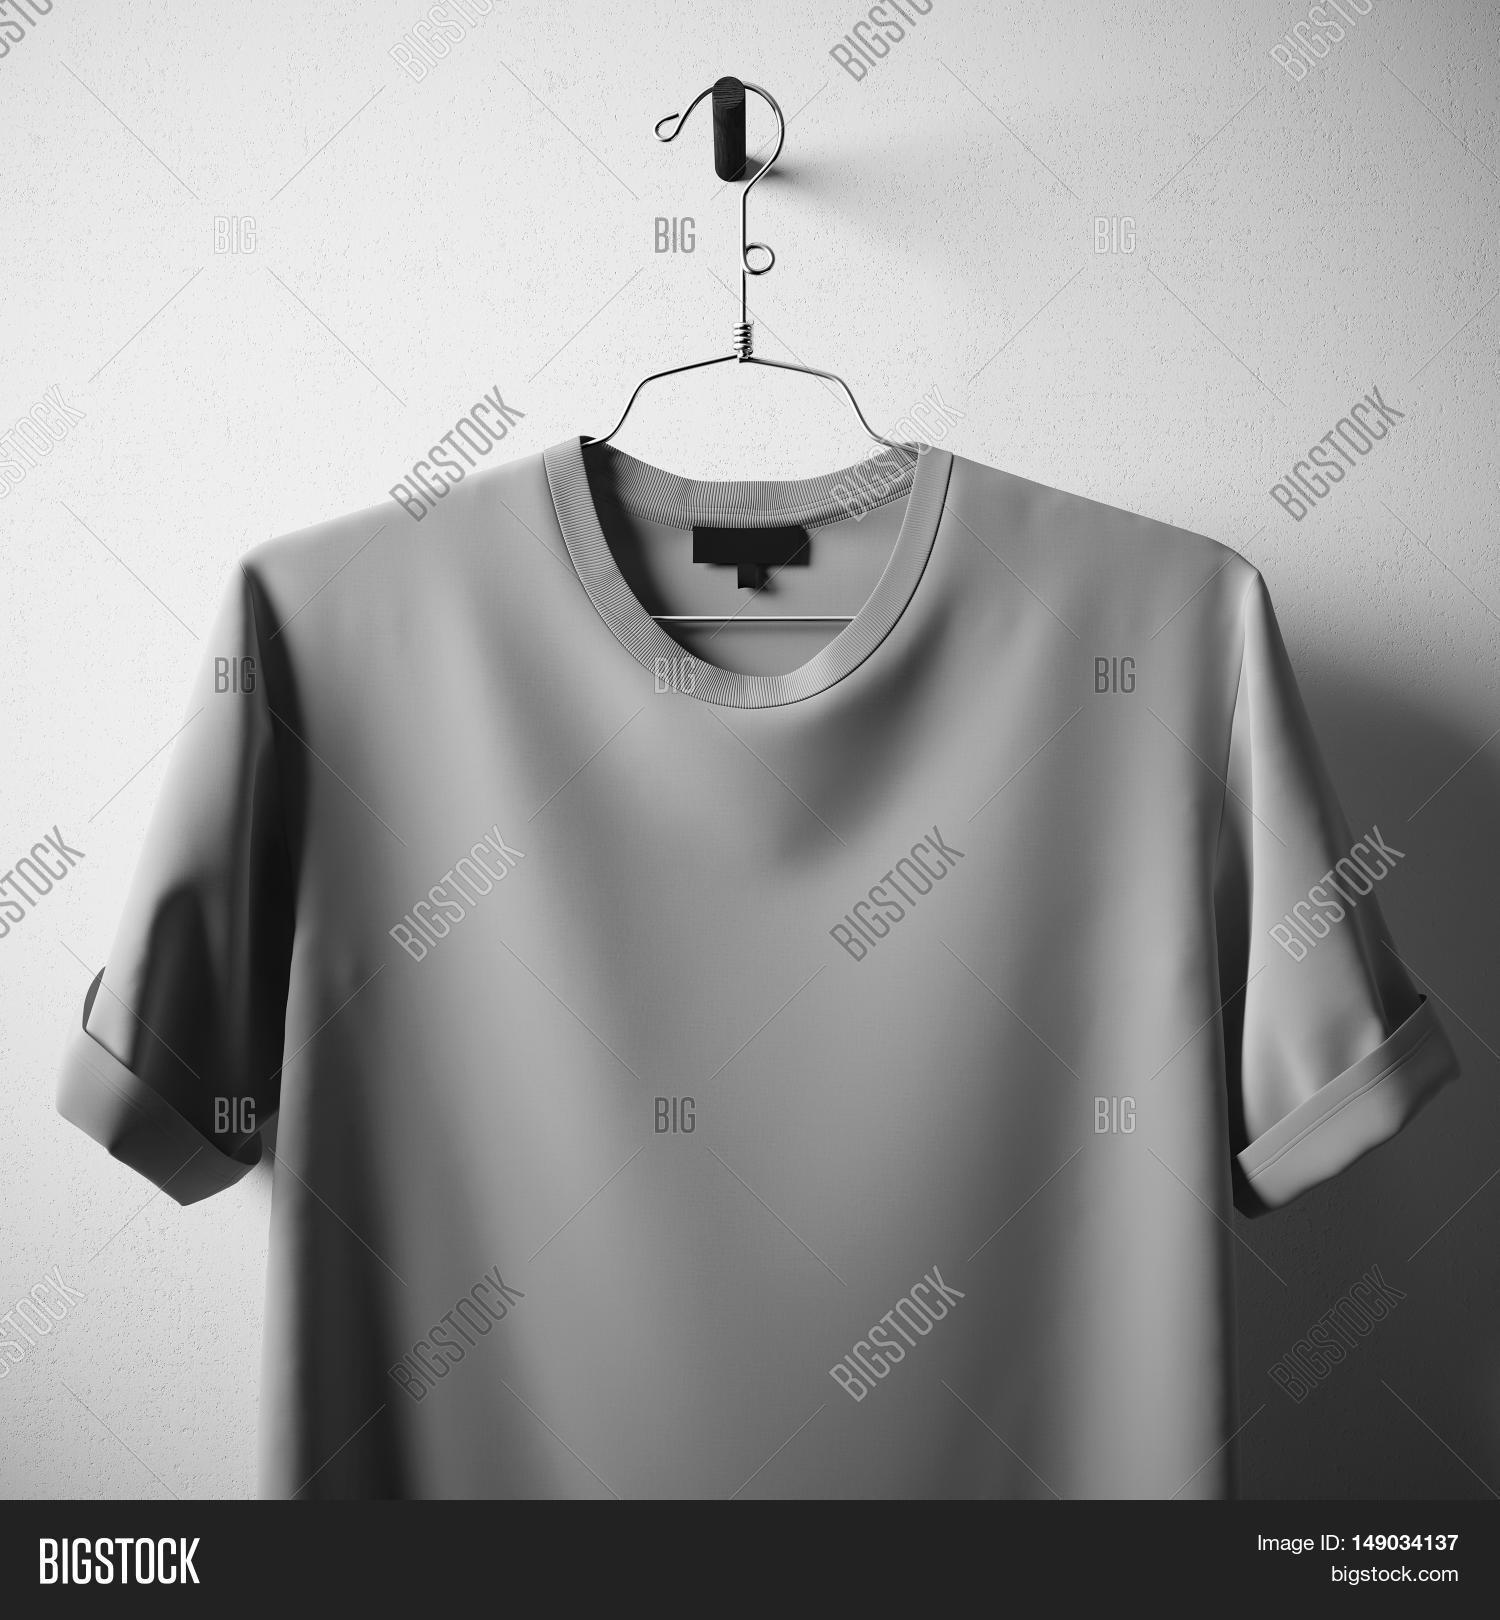 Closeup Blank Gray Cotton Tshirt Image & Photo | Bigstock